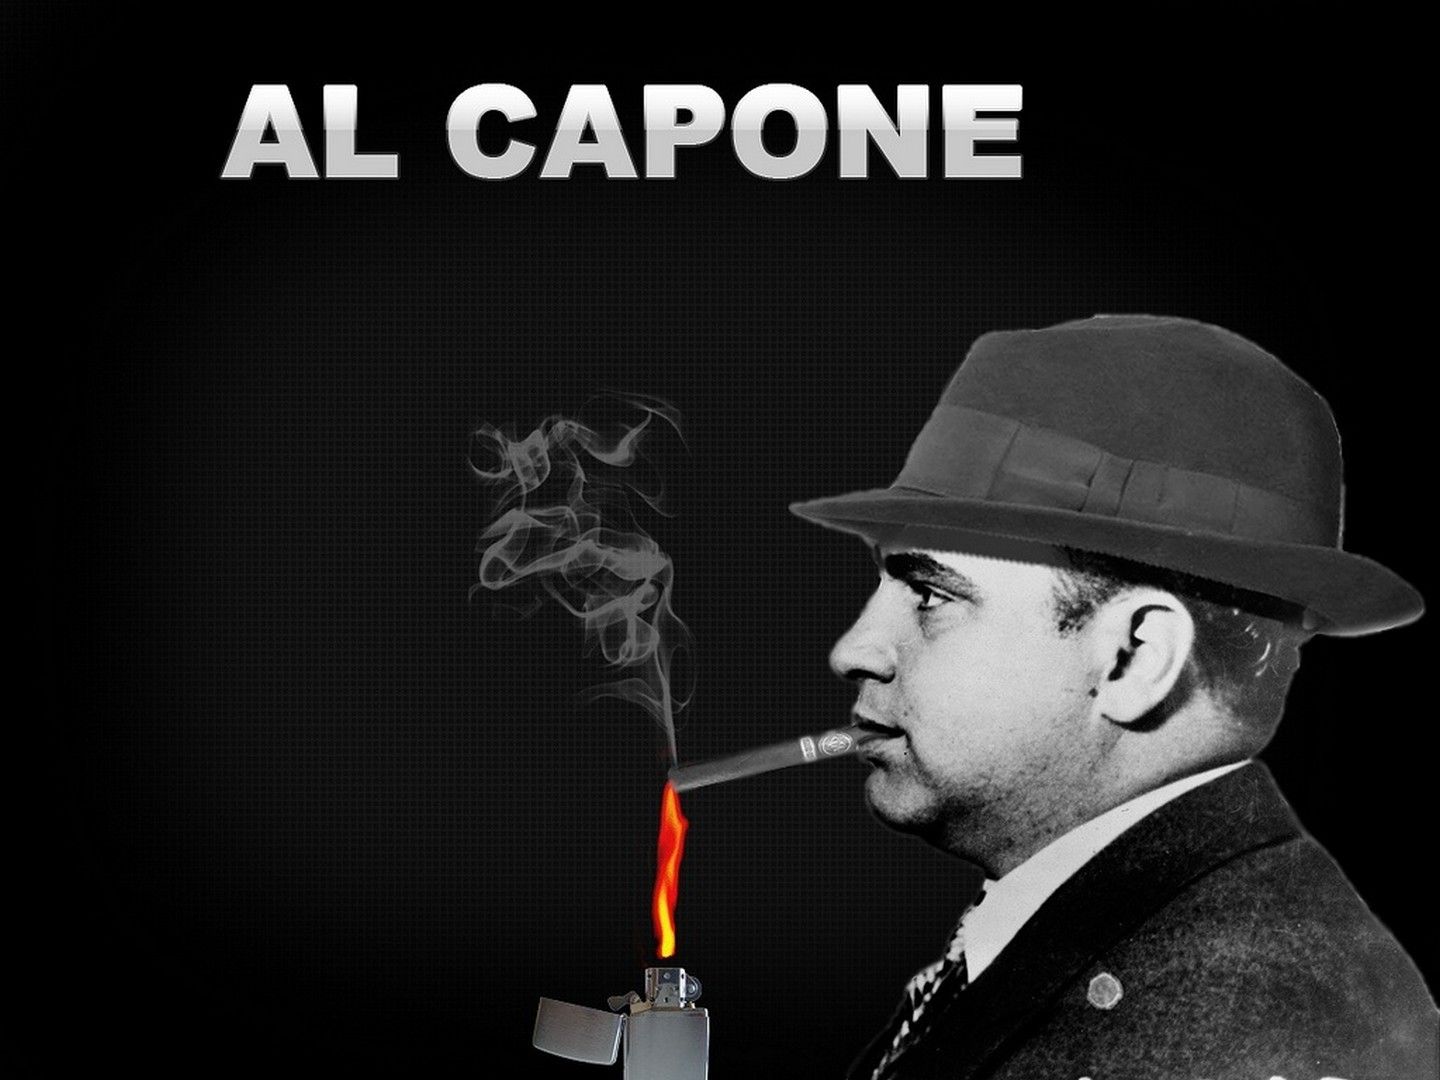 al capone wallpaper,smoking,smoke,font,photo caption,photography